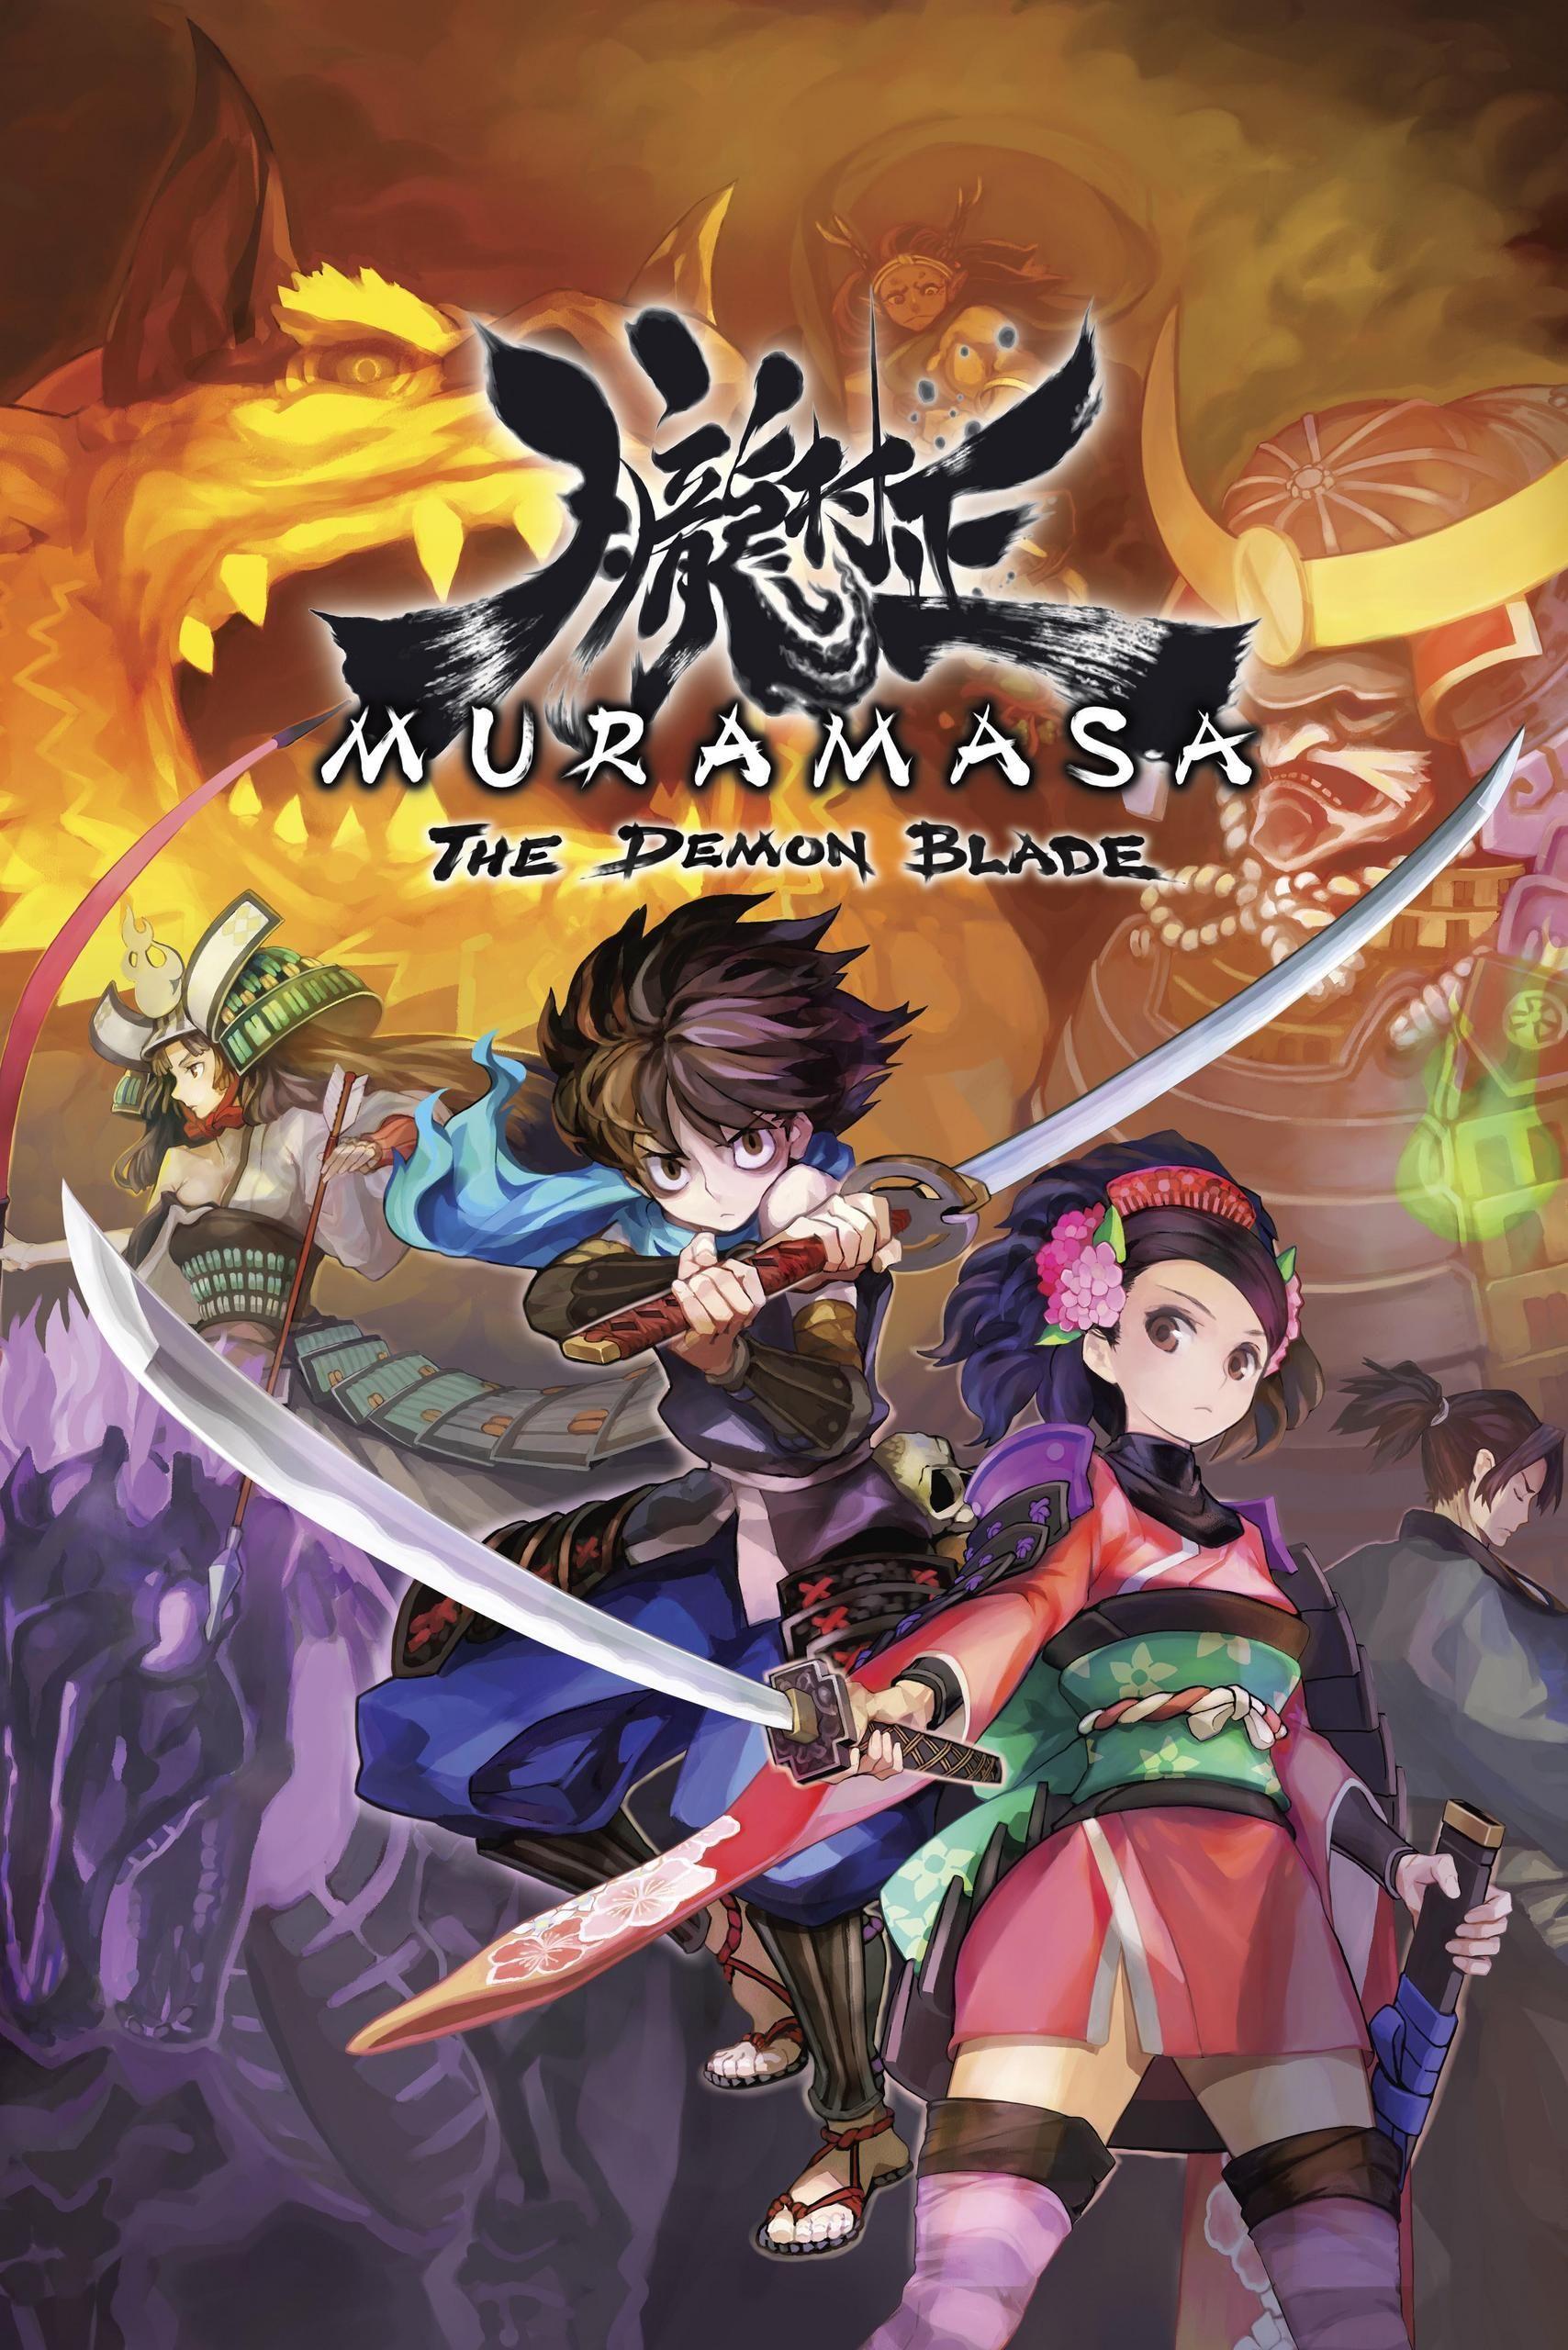 Muramasa: The Demon Blade. Video Game Covers. Blade